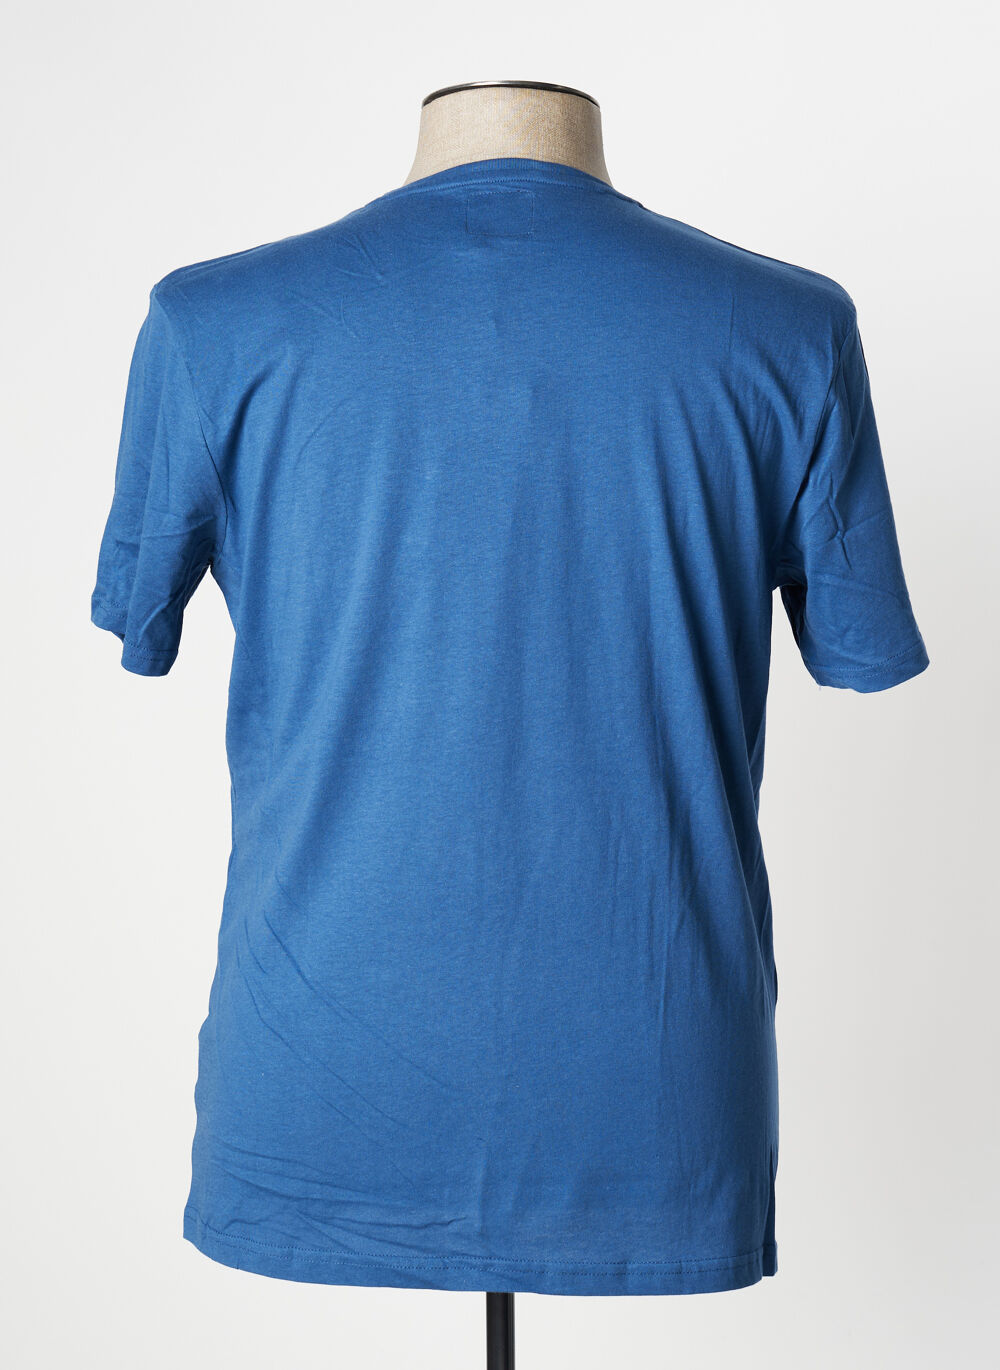 T-shirt homme Close-Up bleu taille : XXL Vtements